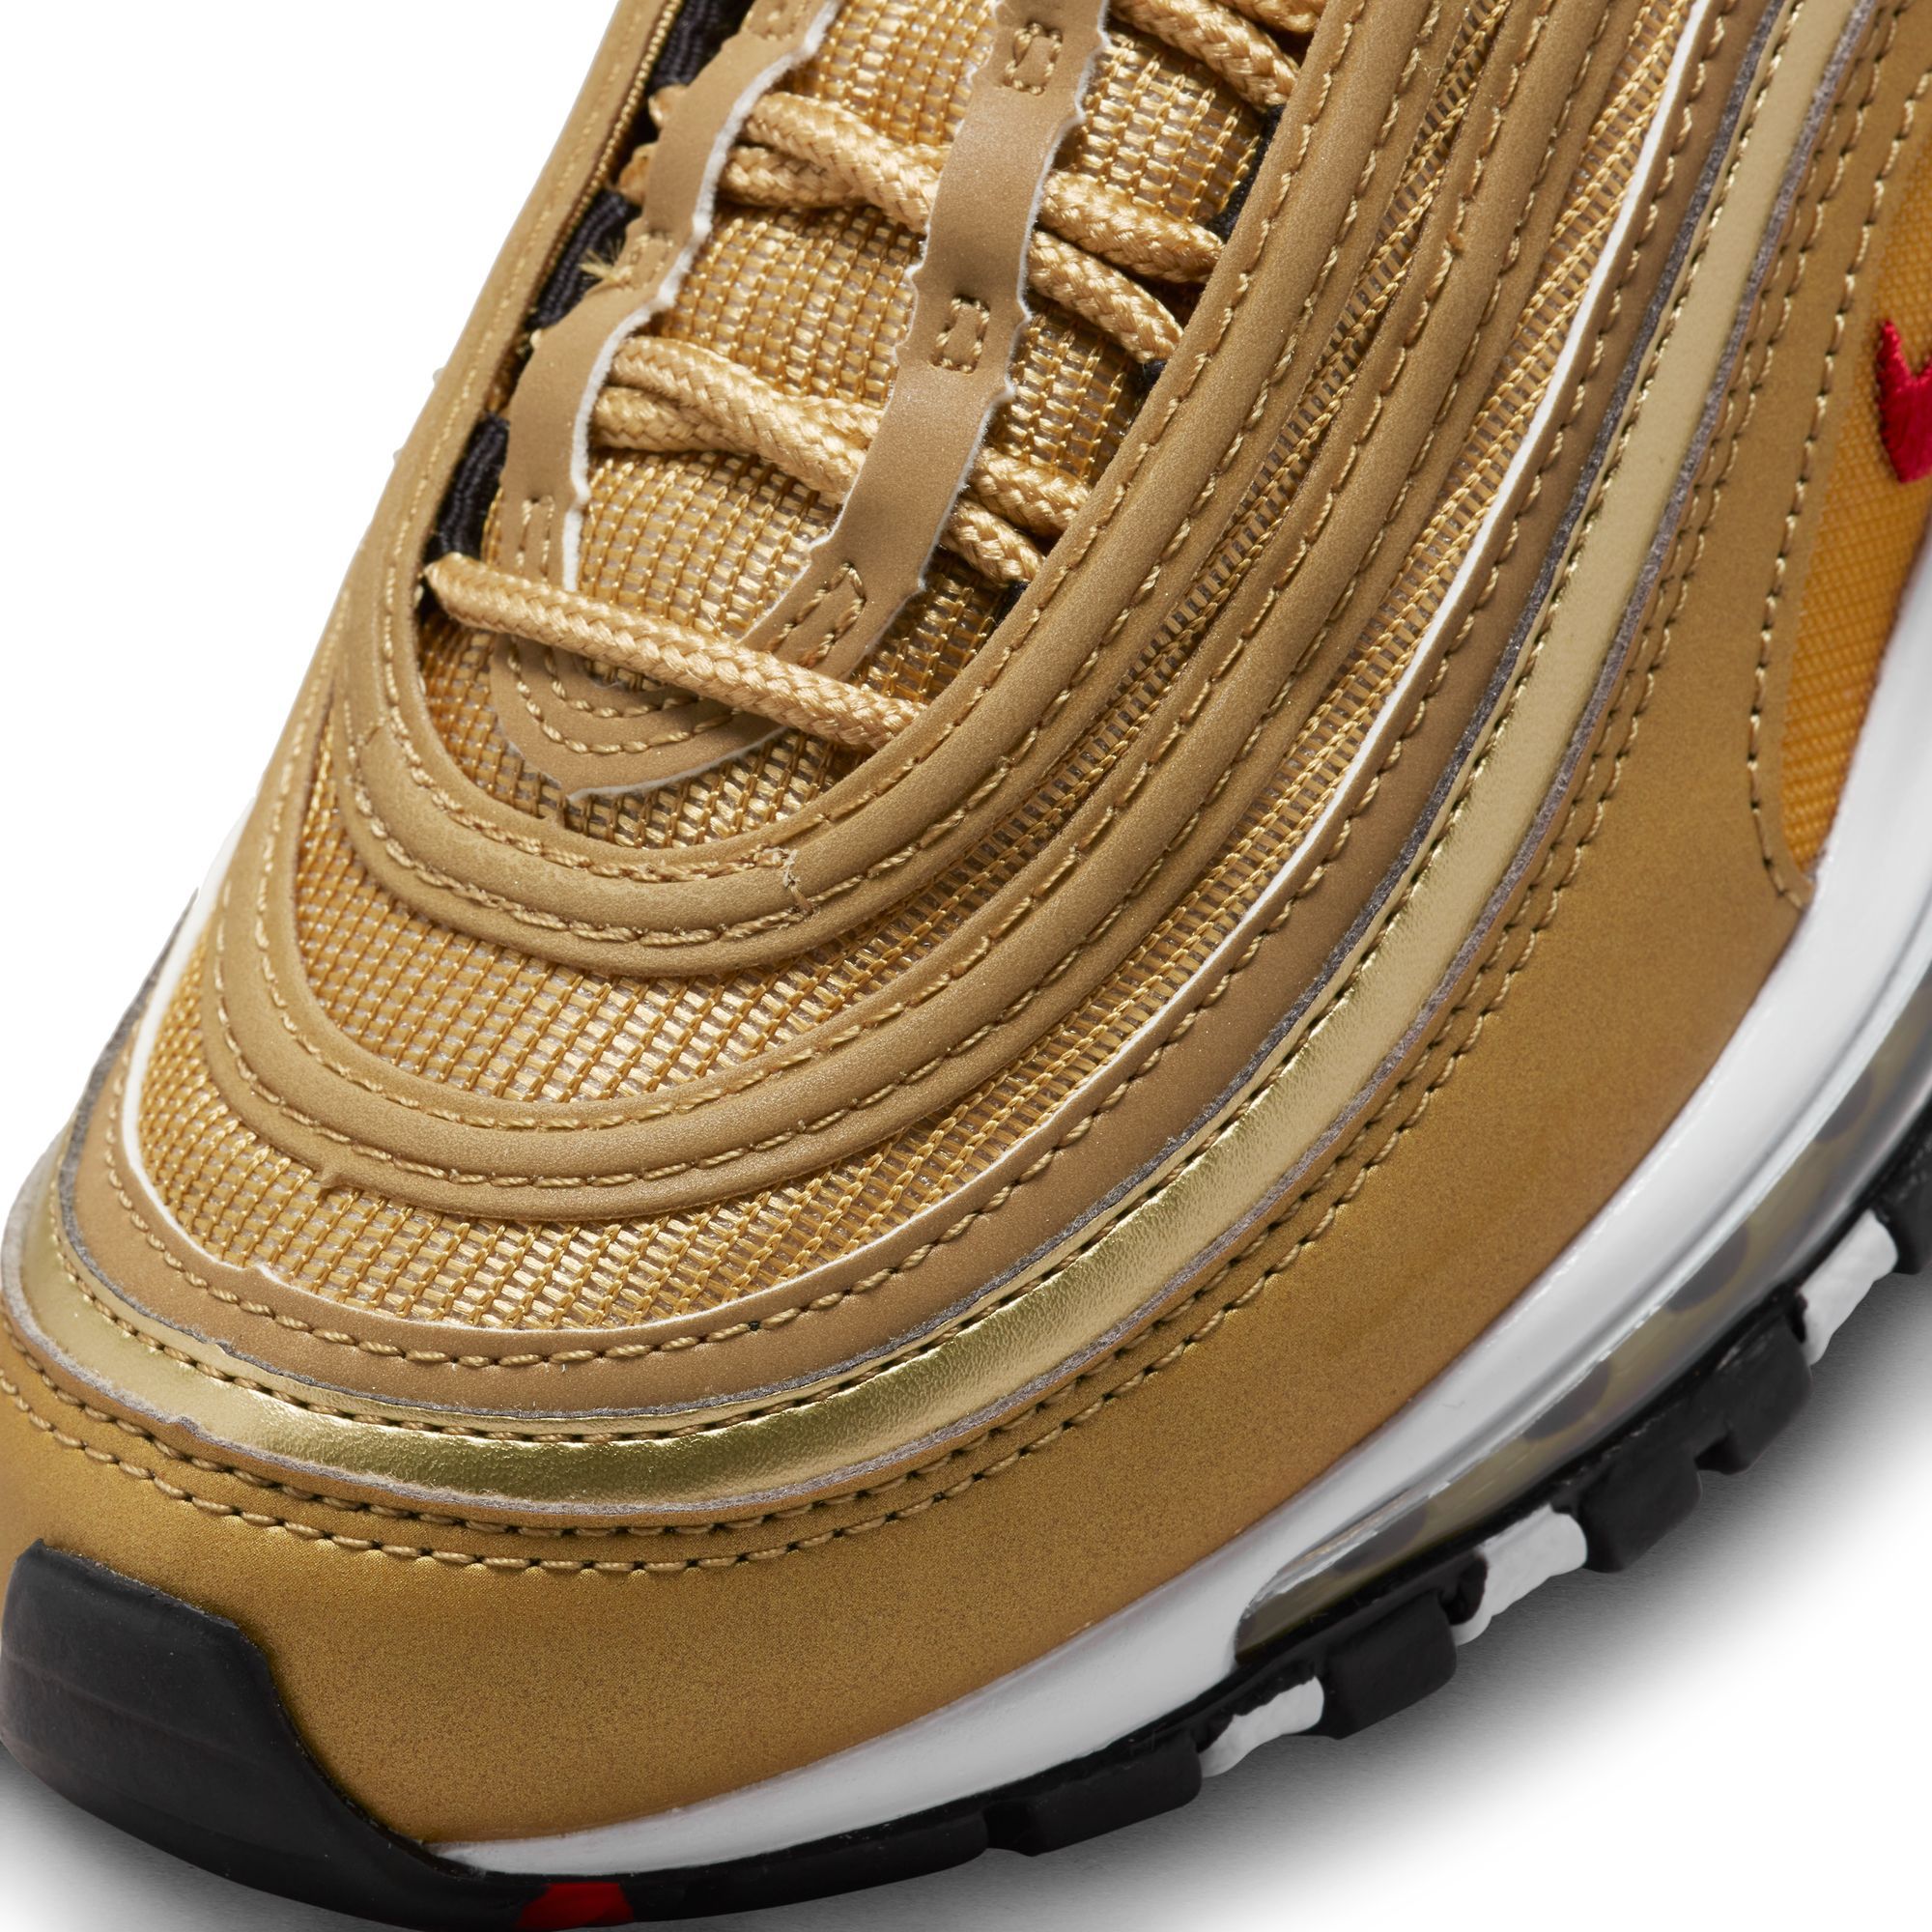 Nike Air Max 97 Metallic Gold Shoes